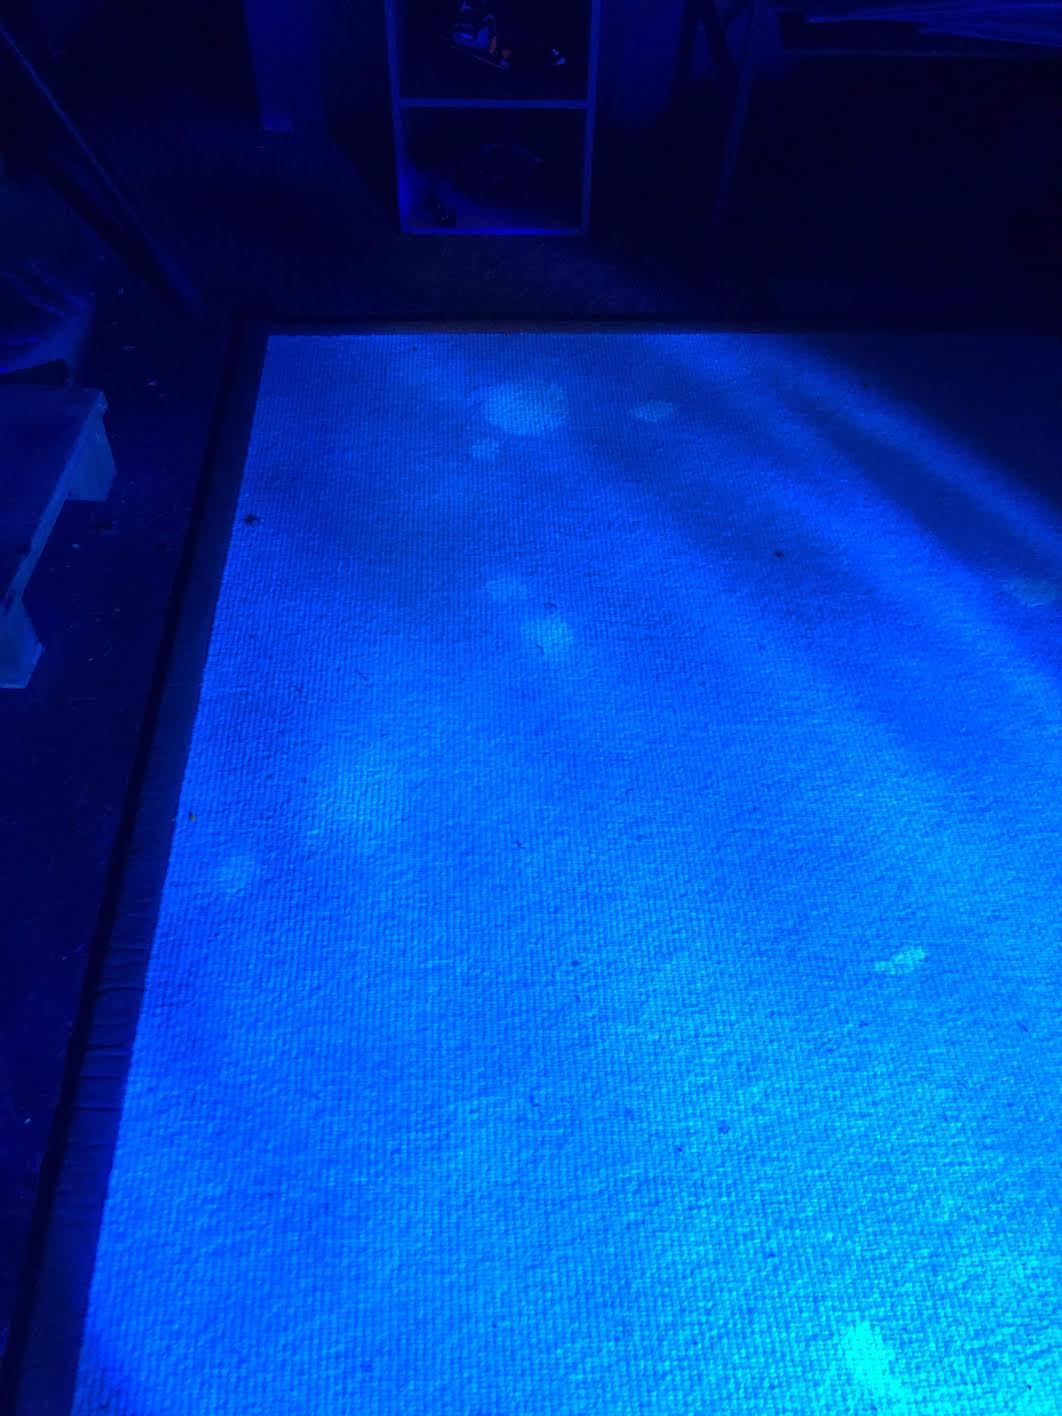 Using a UV light to highlight urine on rug